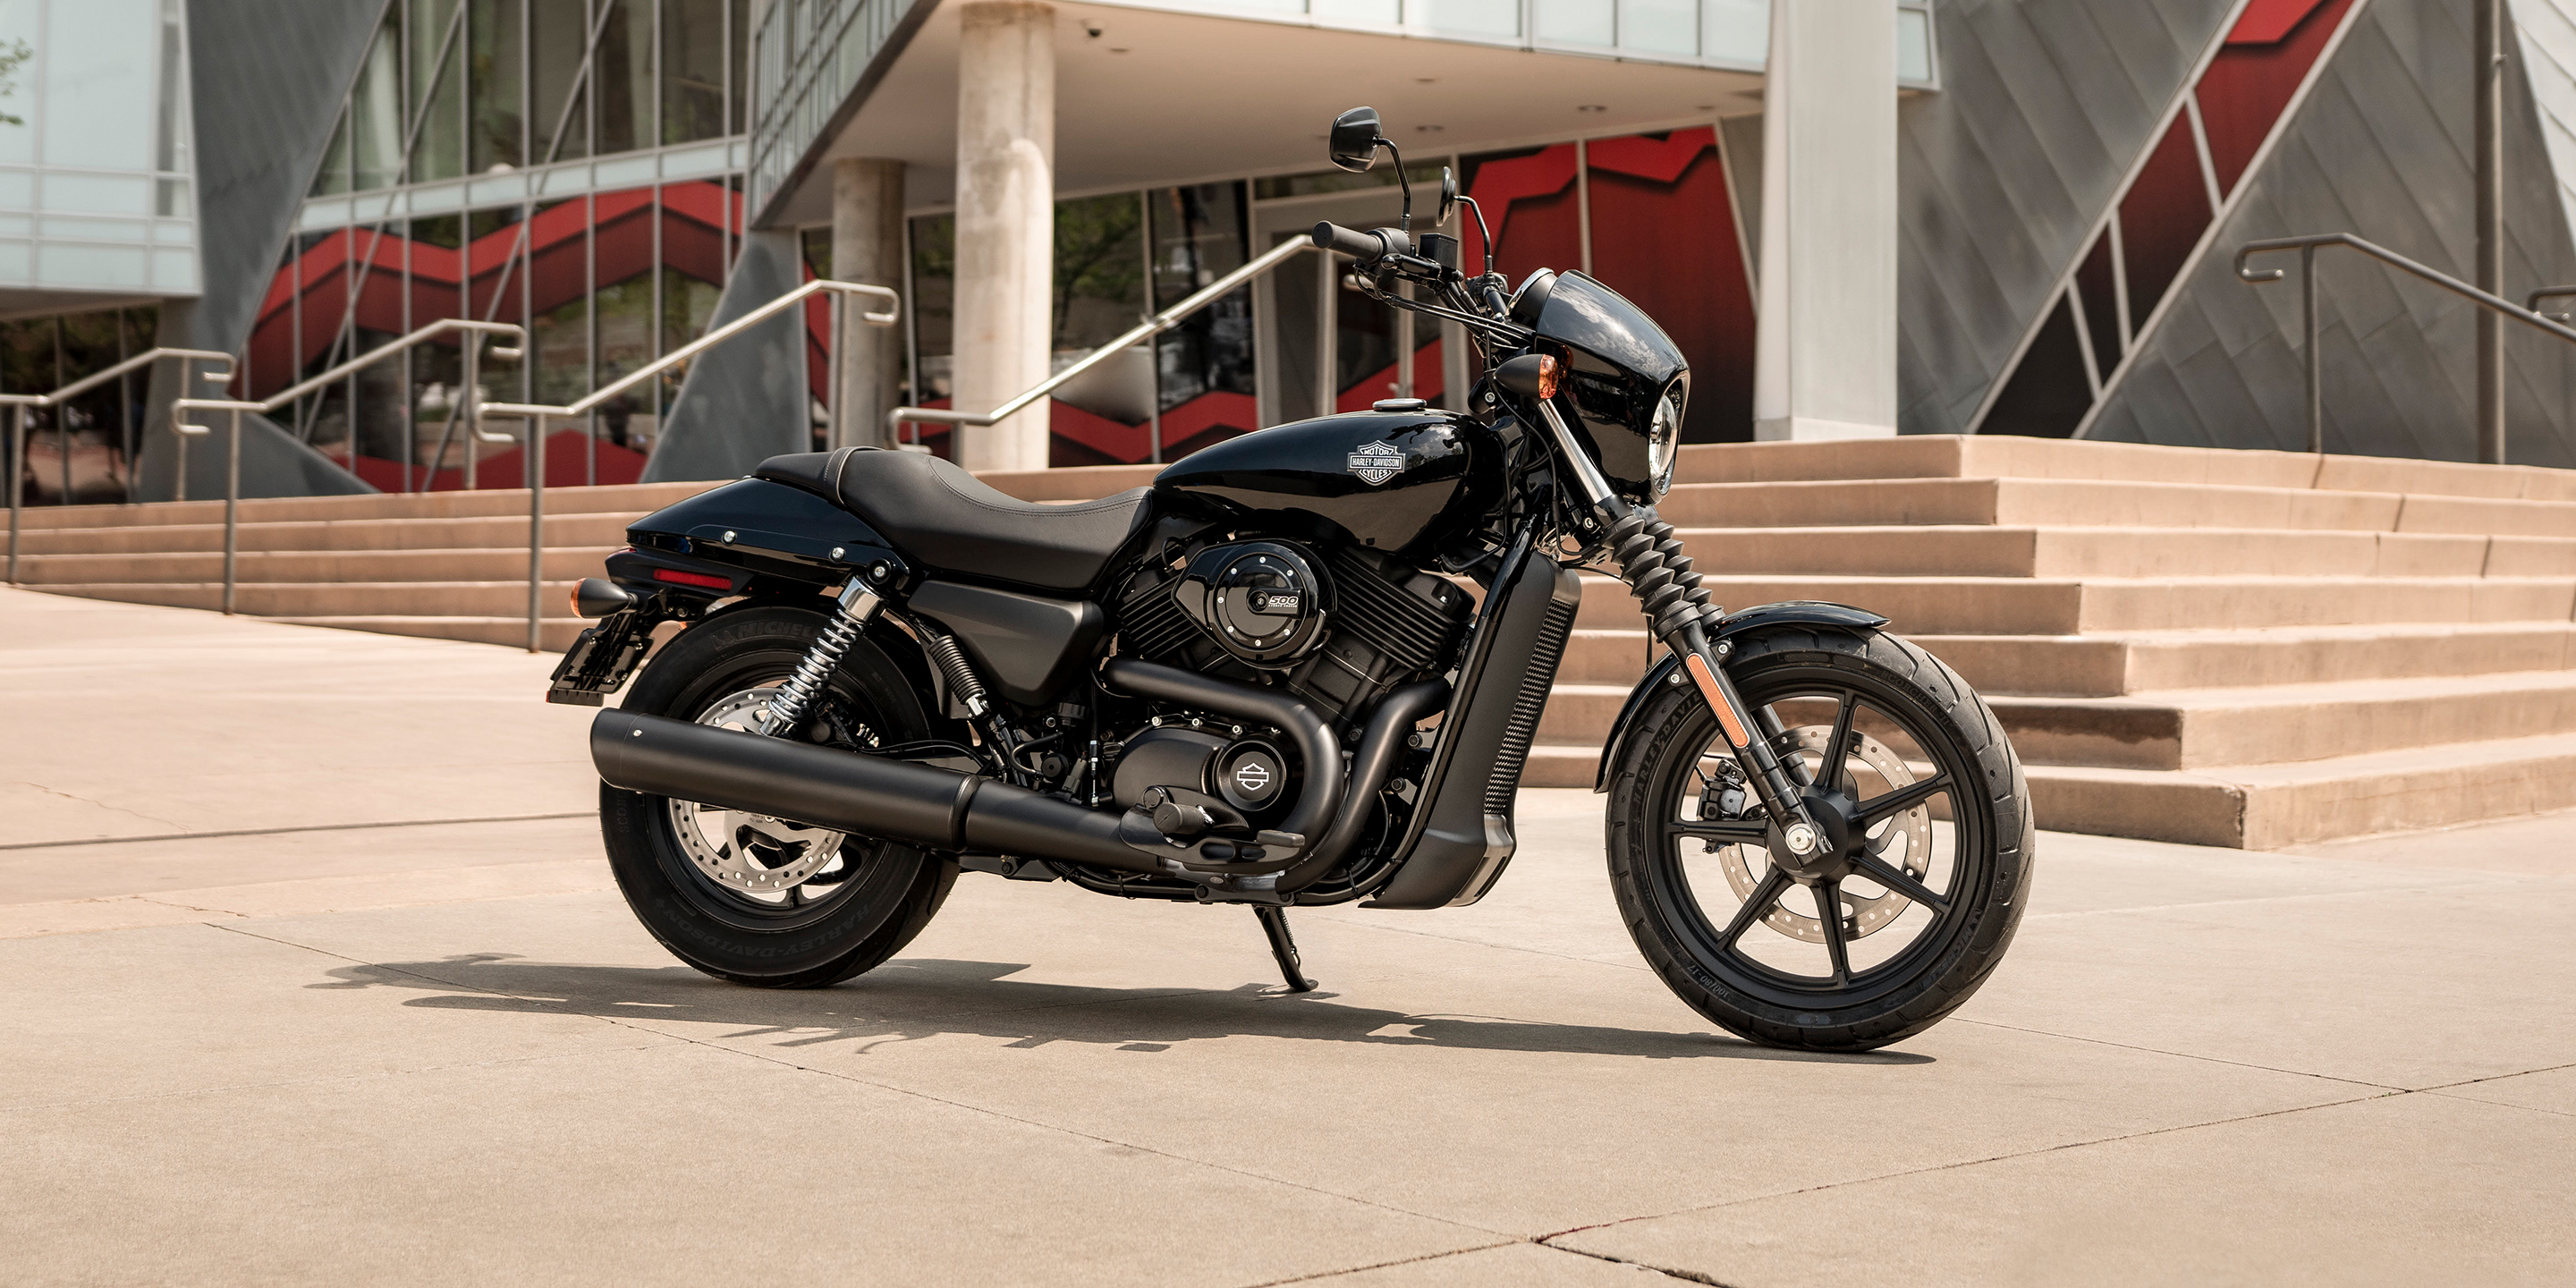 2019 Harley  Davidson  Street  500  Motorcycle Harley  